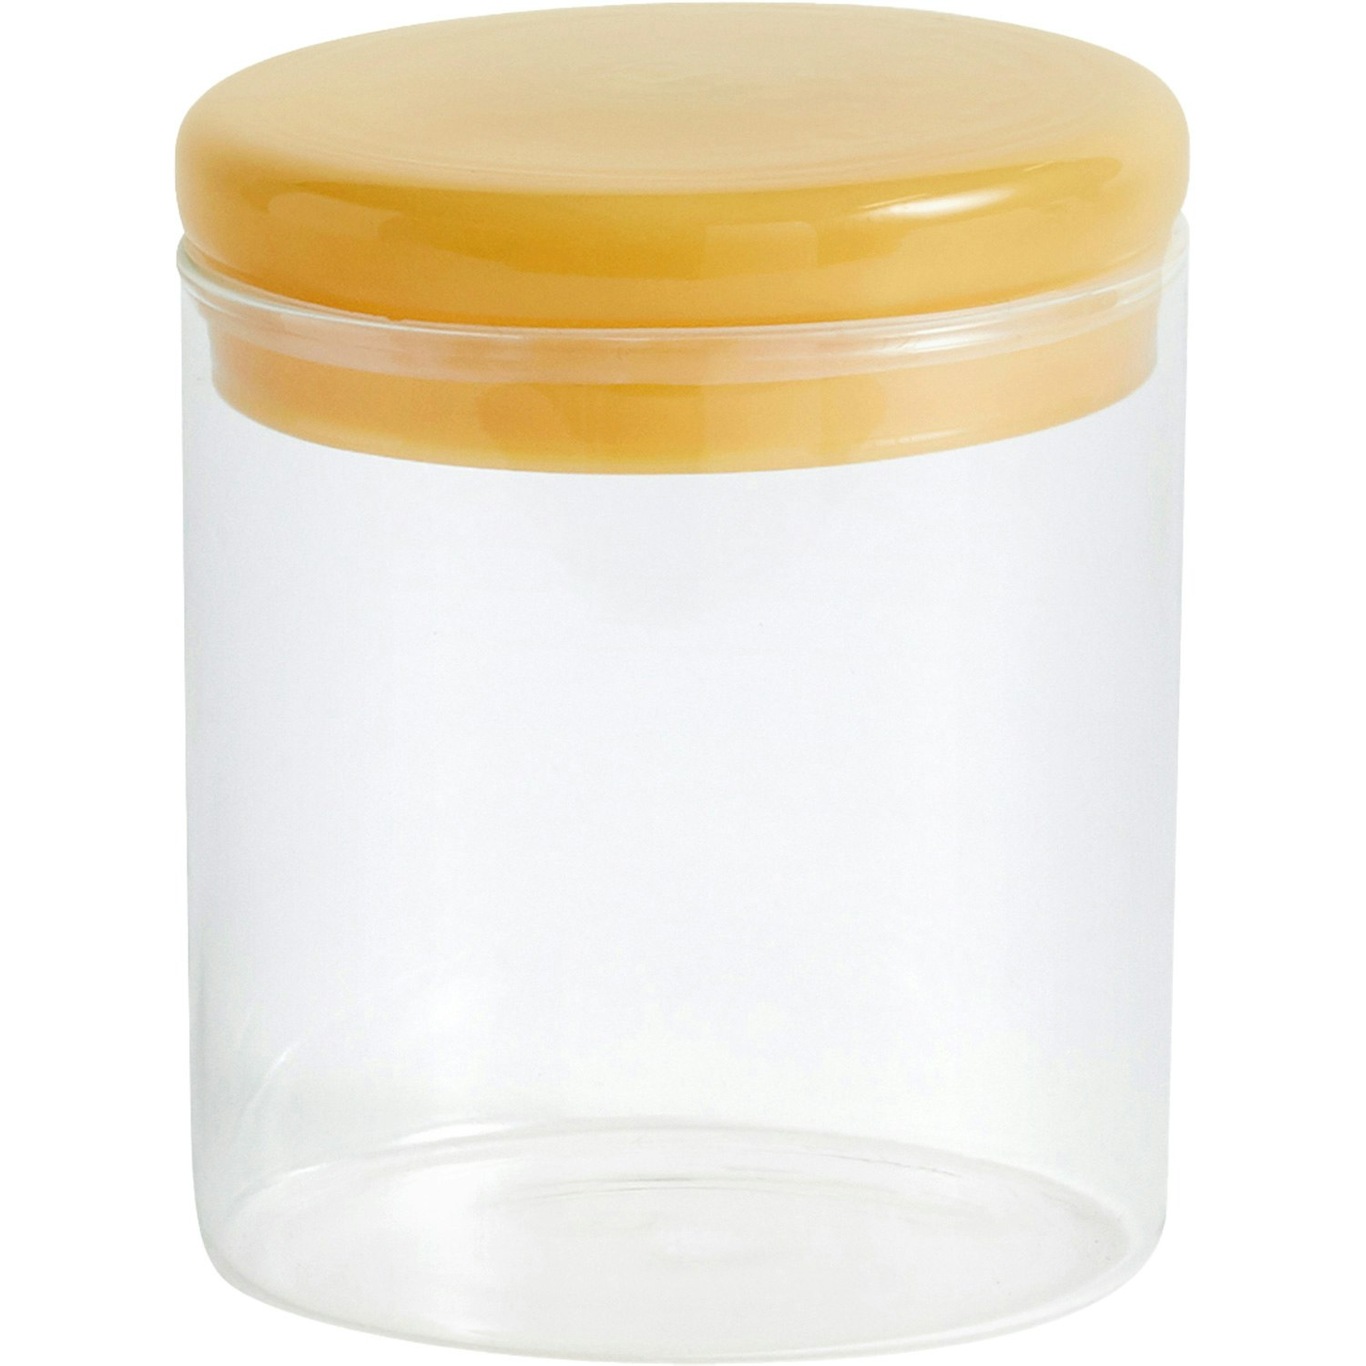 Hay - Borosilicate Jar